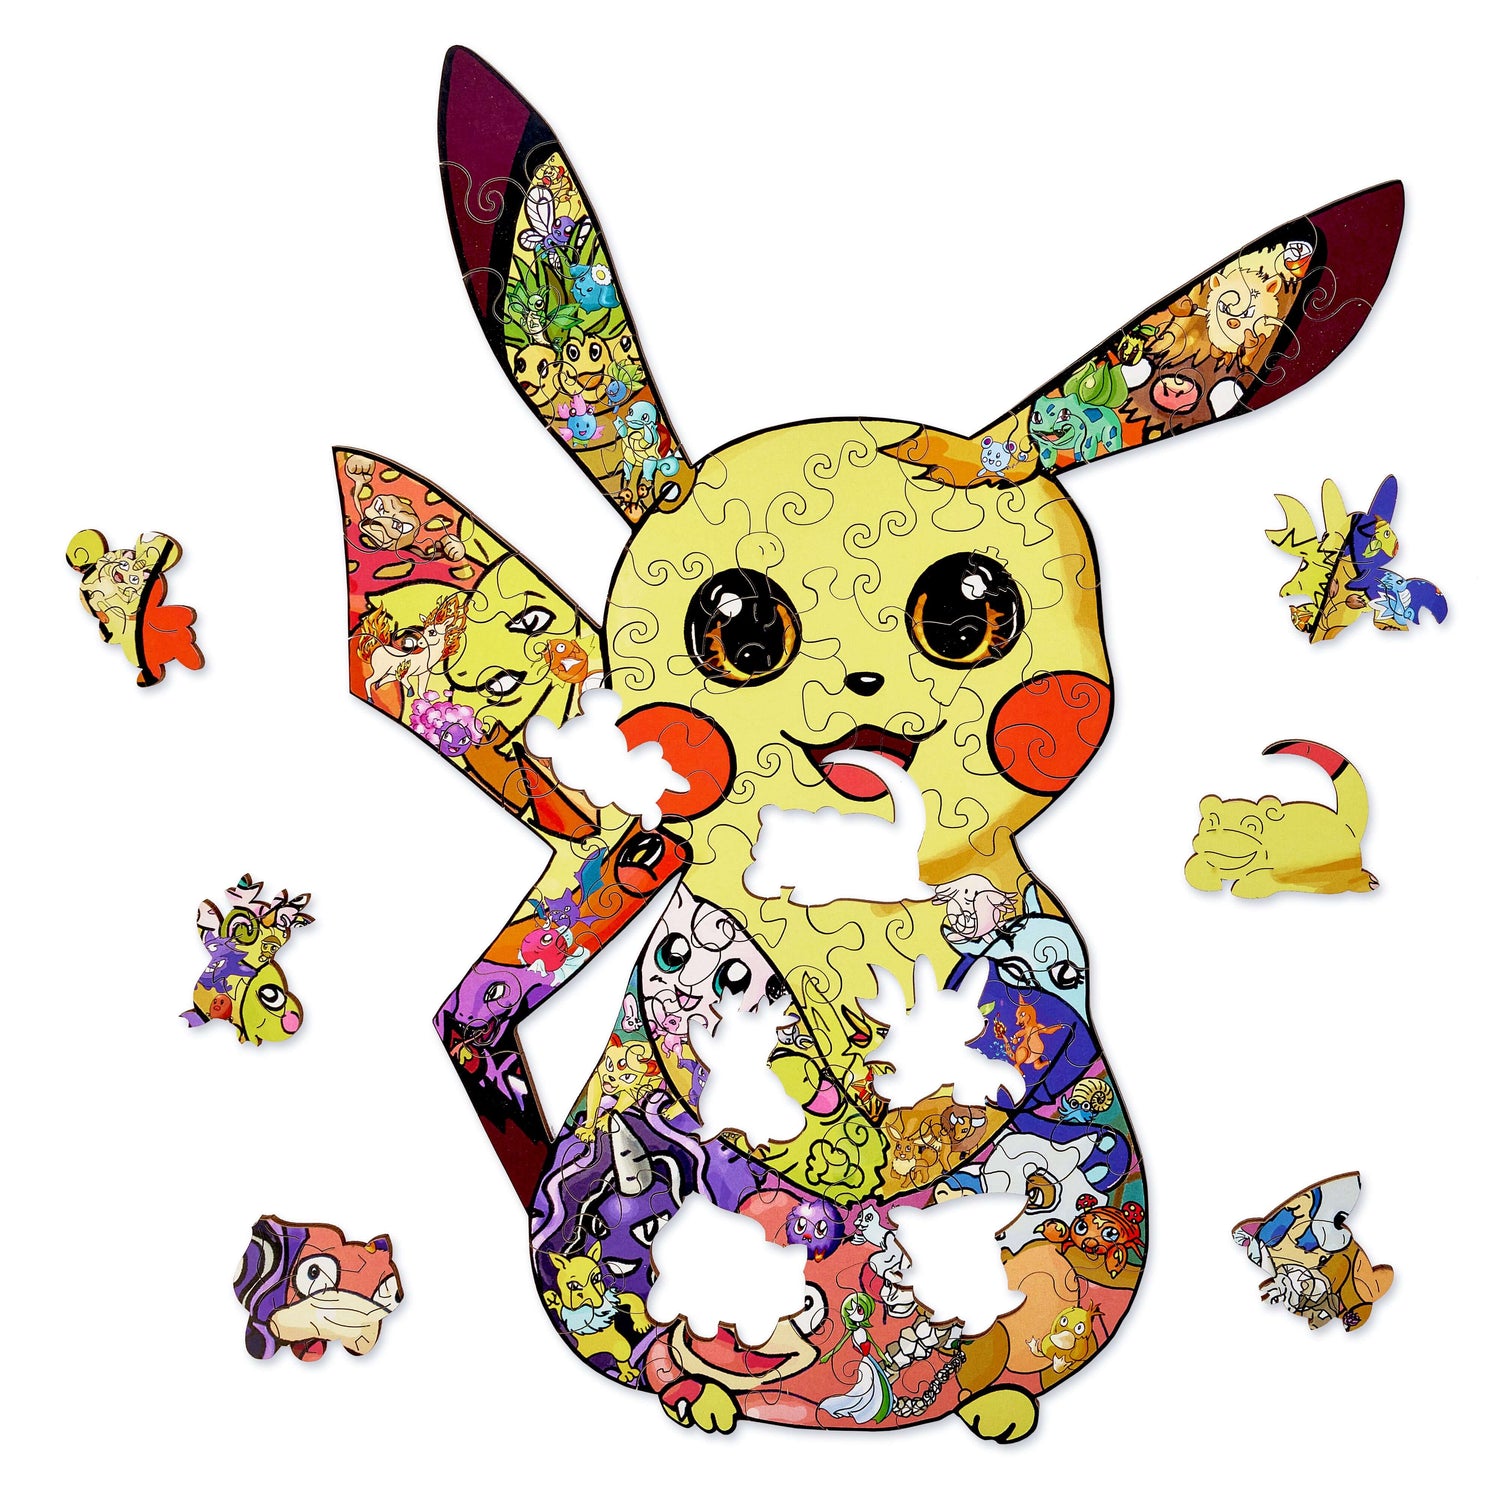 3D Jigsaw Puzzle Pokemon Pikachu